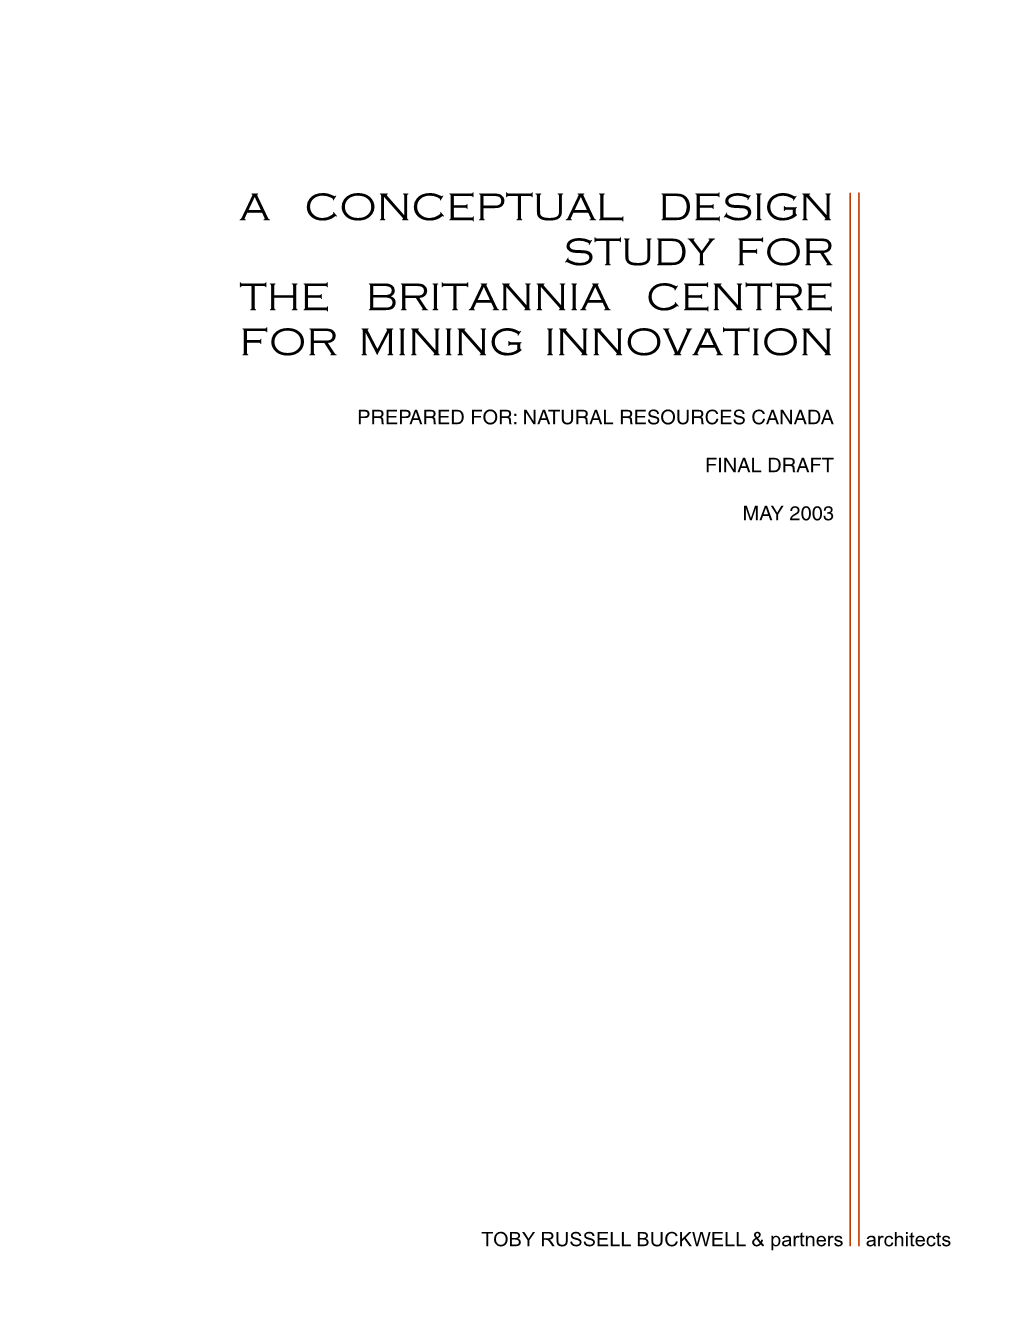 A Conceptual Design Study for the Britannia Centre for Mining Innovation